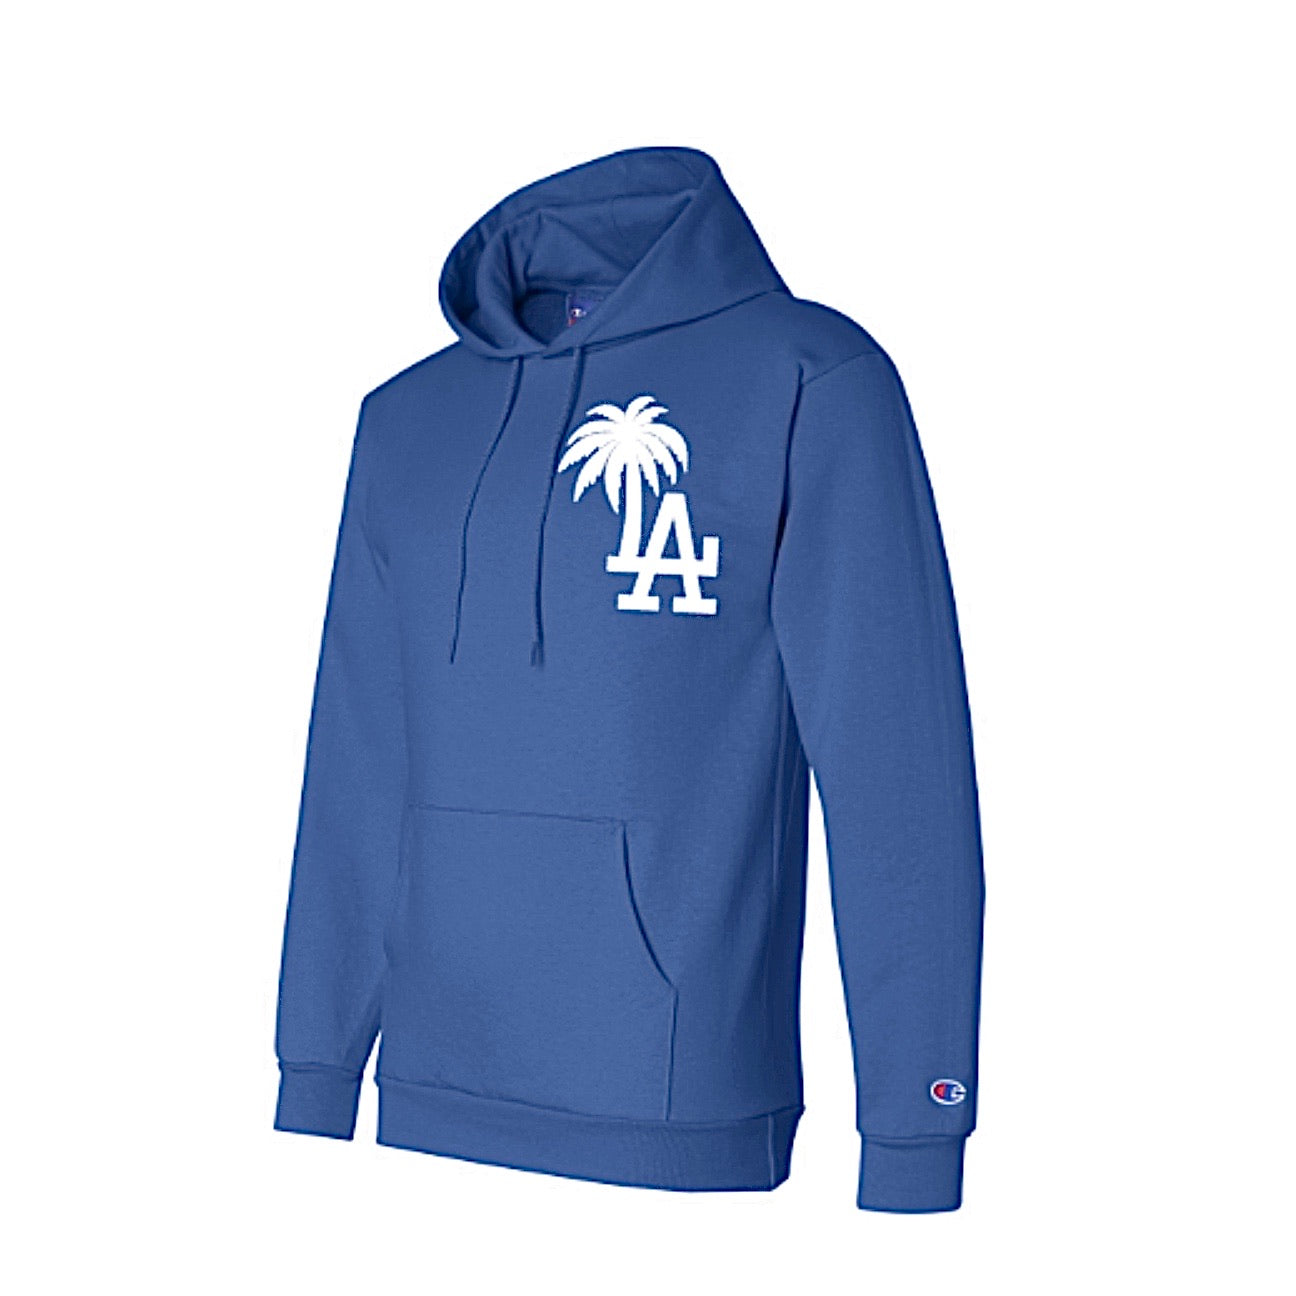 L.A. Beach Palm Tree Life YOUTH Hoodie Sweater (Champion/Hoodie)